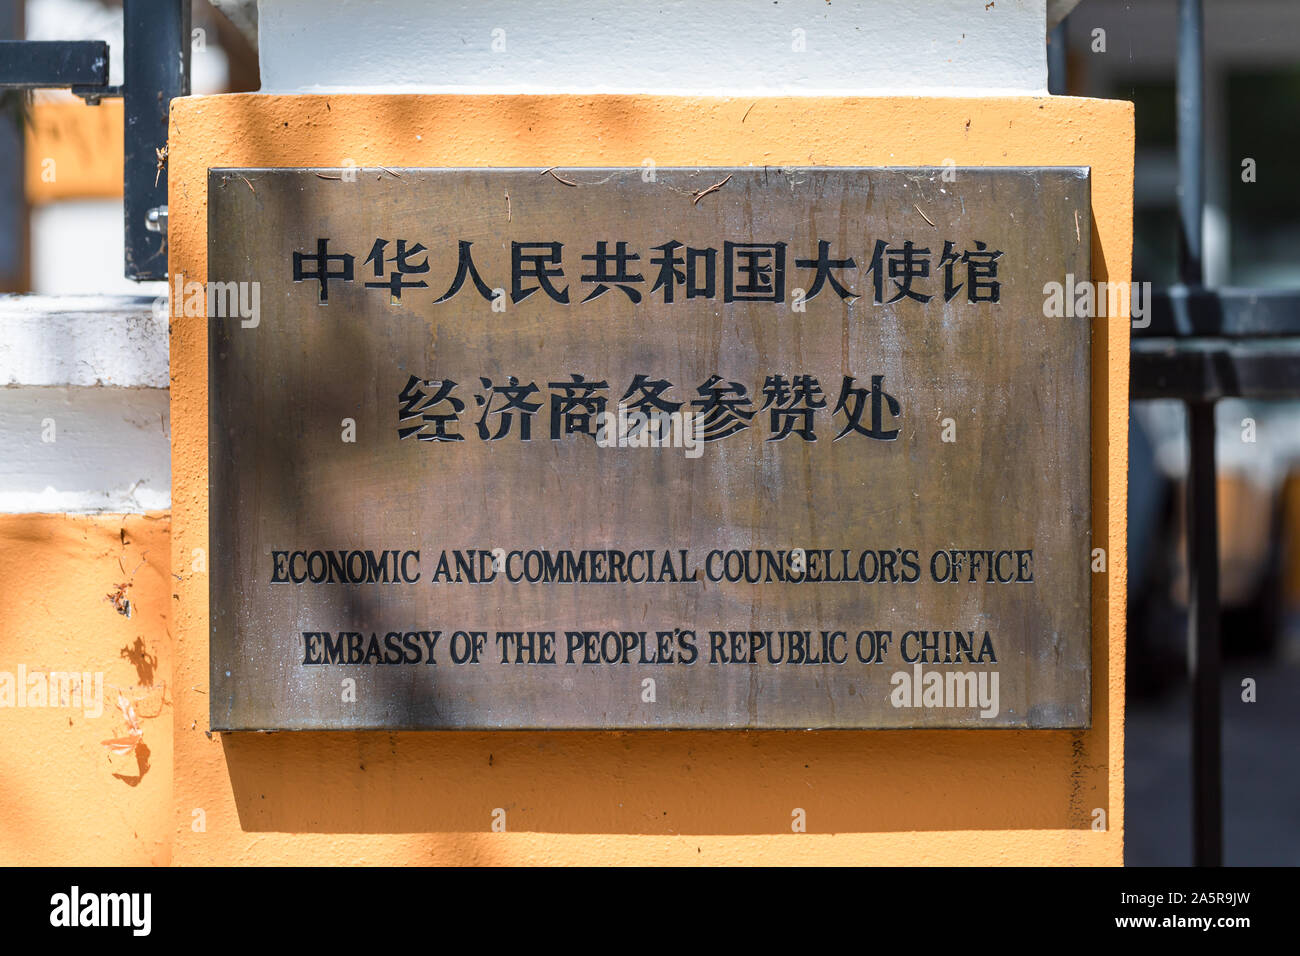 Eronomic und Commercial Counsellor Office, Botschaft der Volksrepublik China, Hellerup, Dänemark Stockfoto